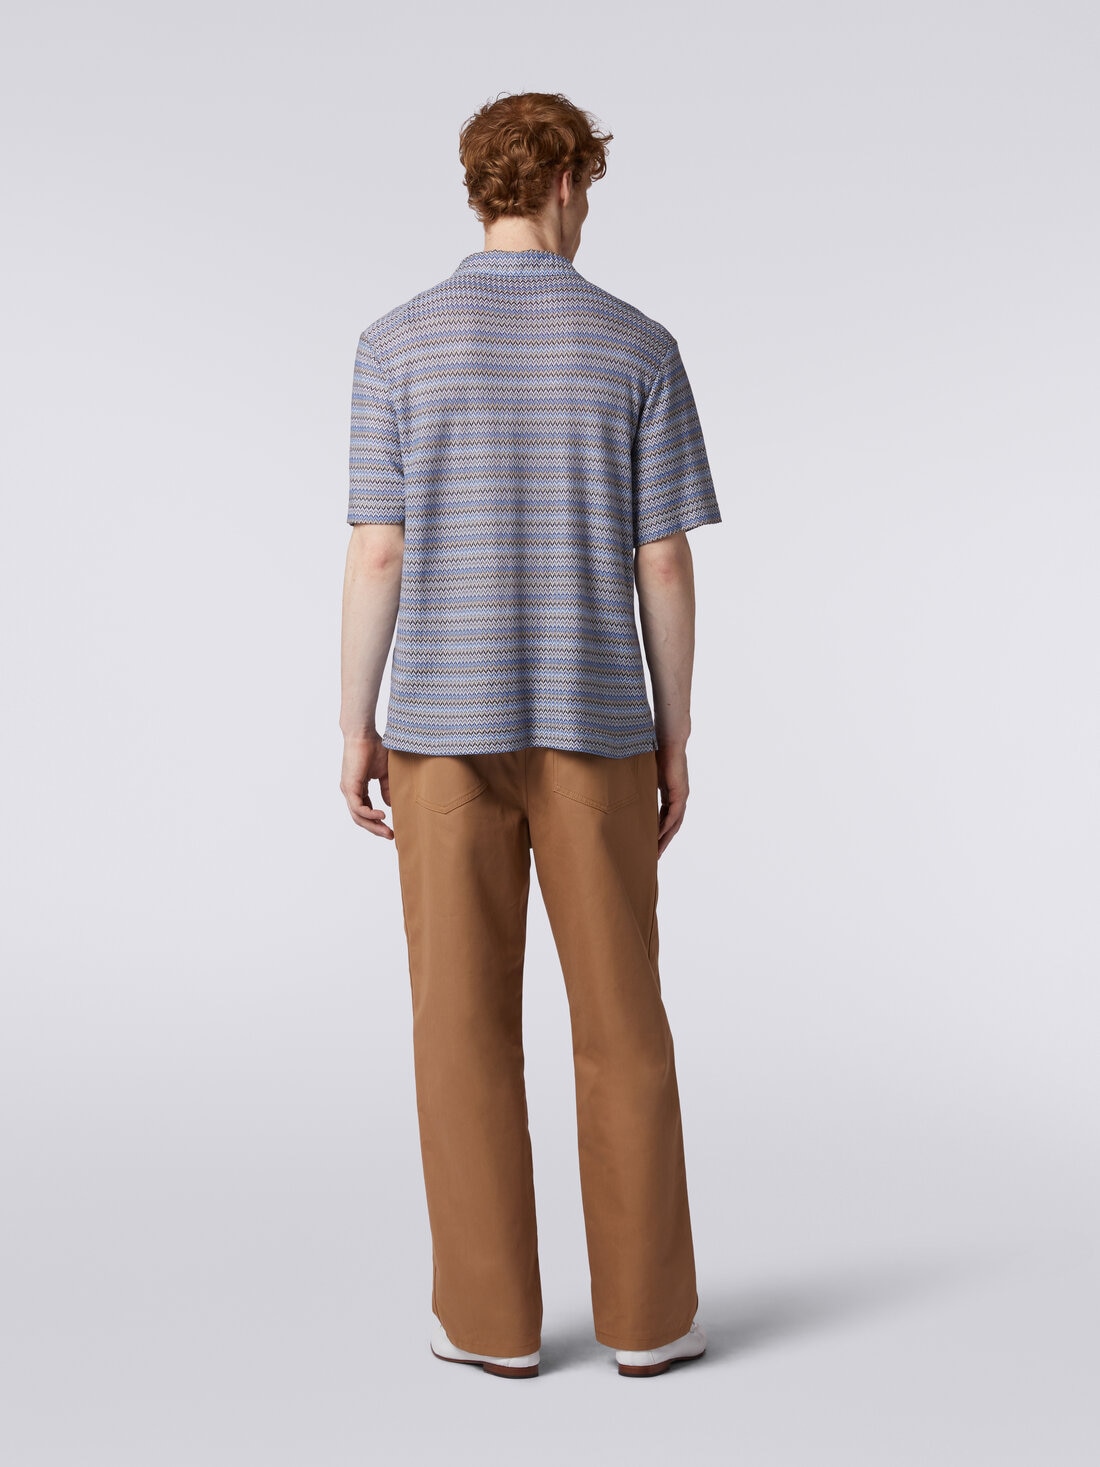 Short-sleeved zigzag bowling shirt, Blue - US24SJ09BR00U6S72D2 - 3